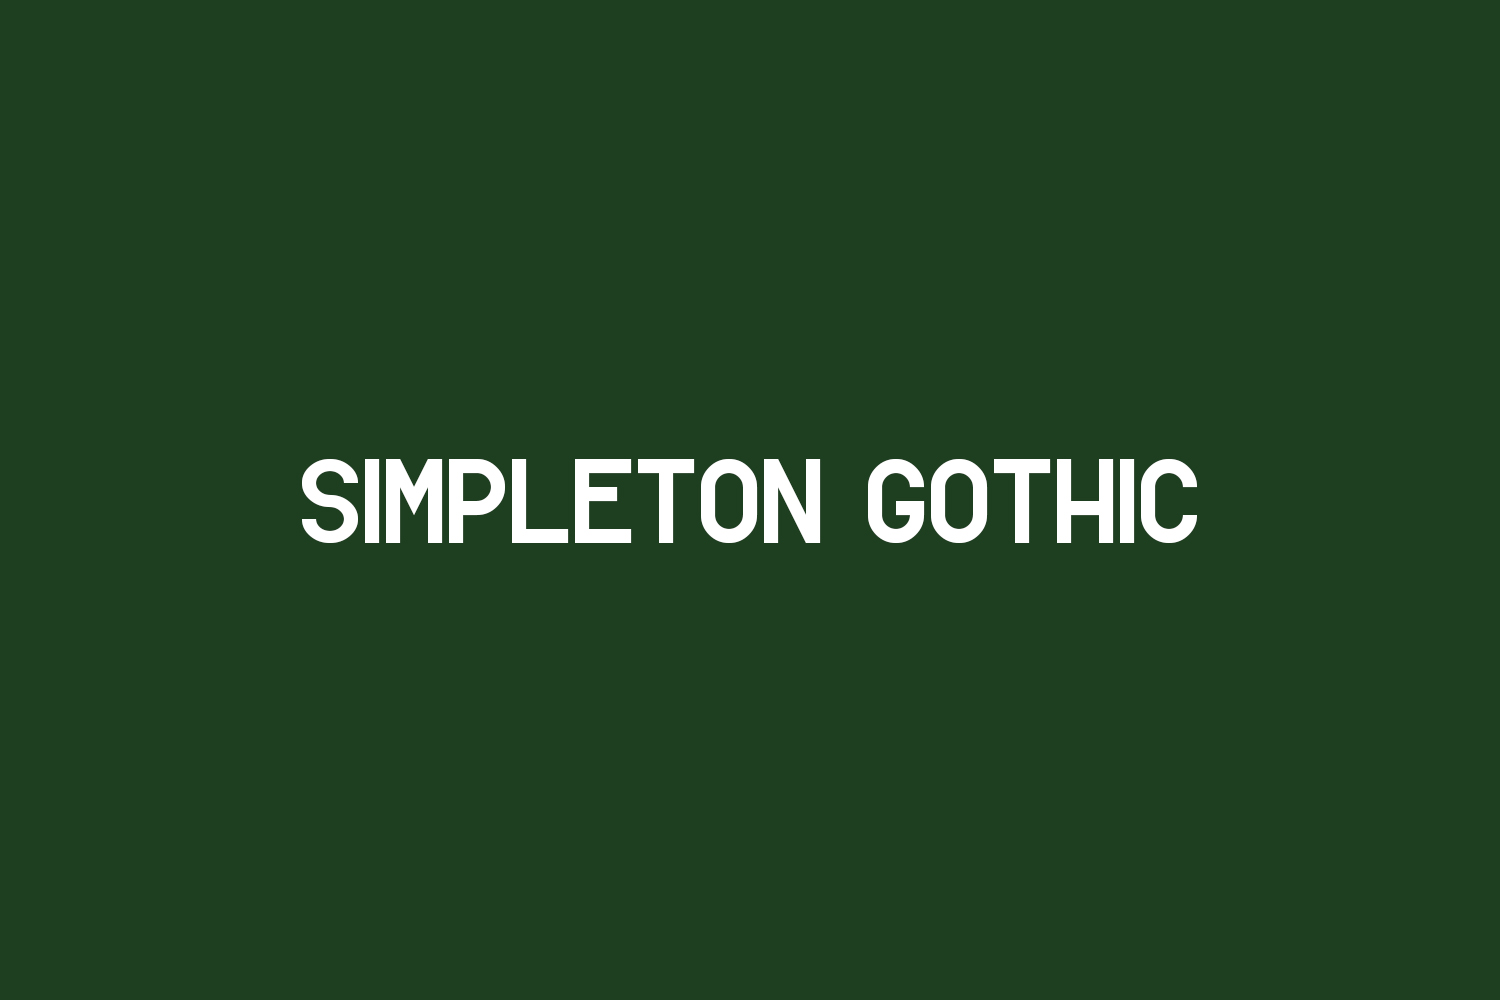 Simpleton Gothic Free Font